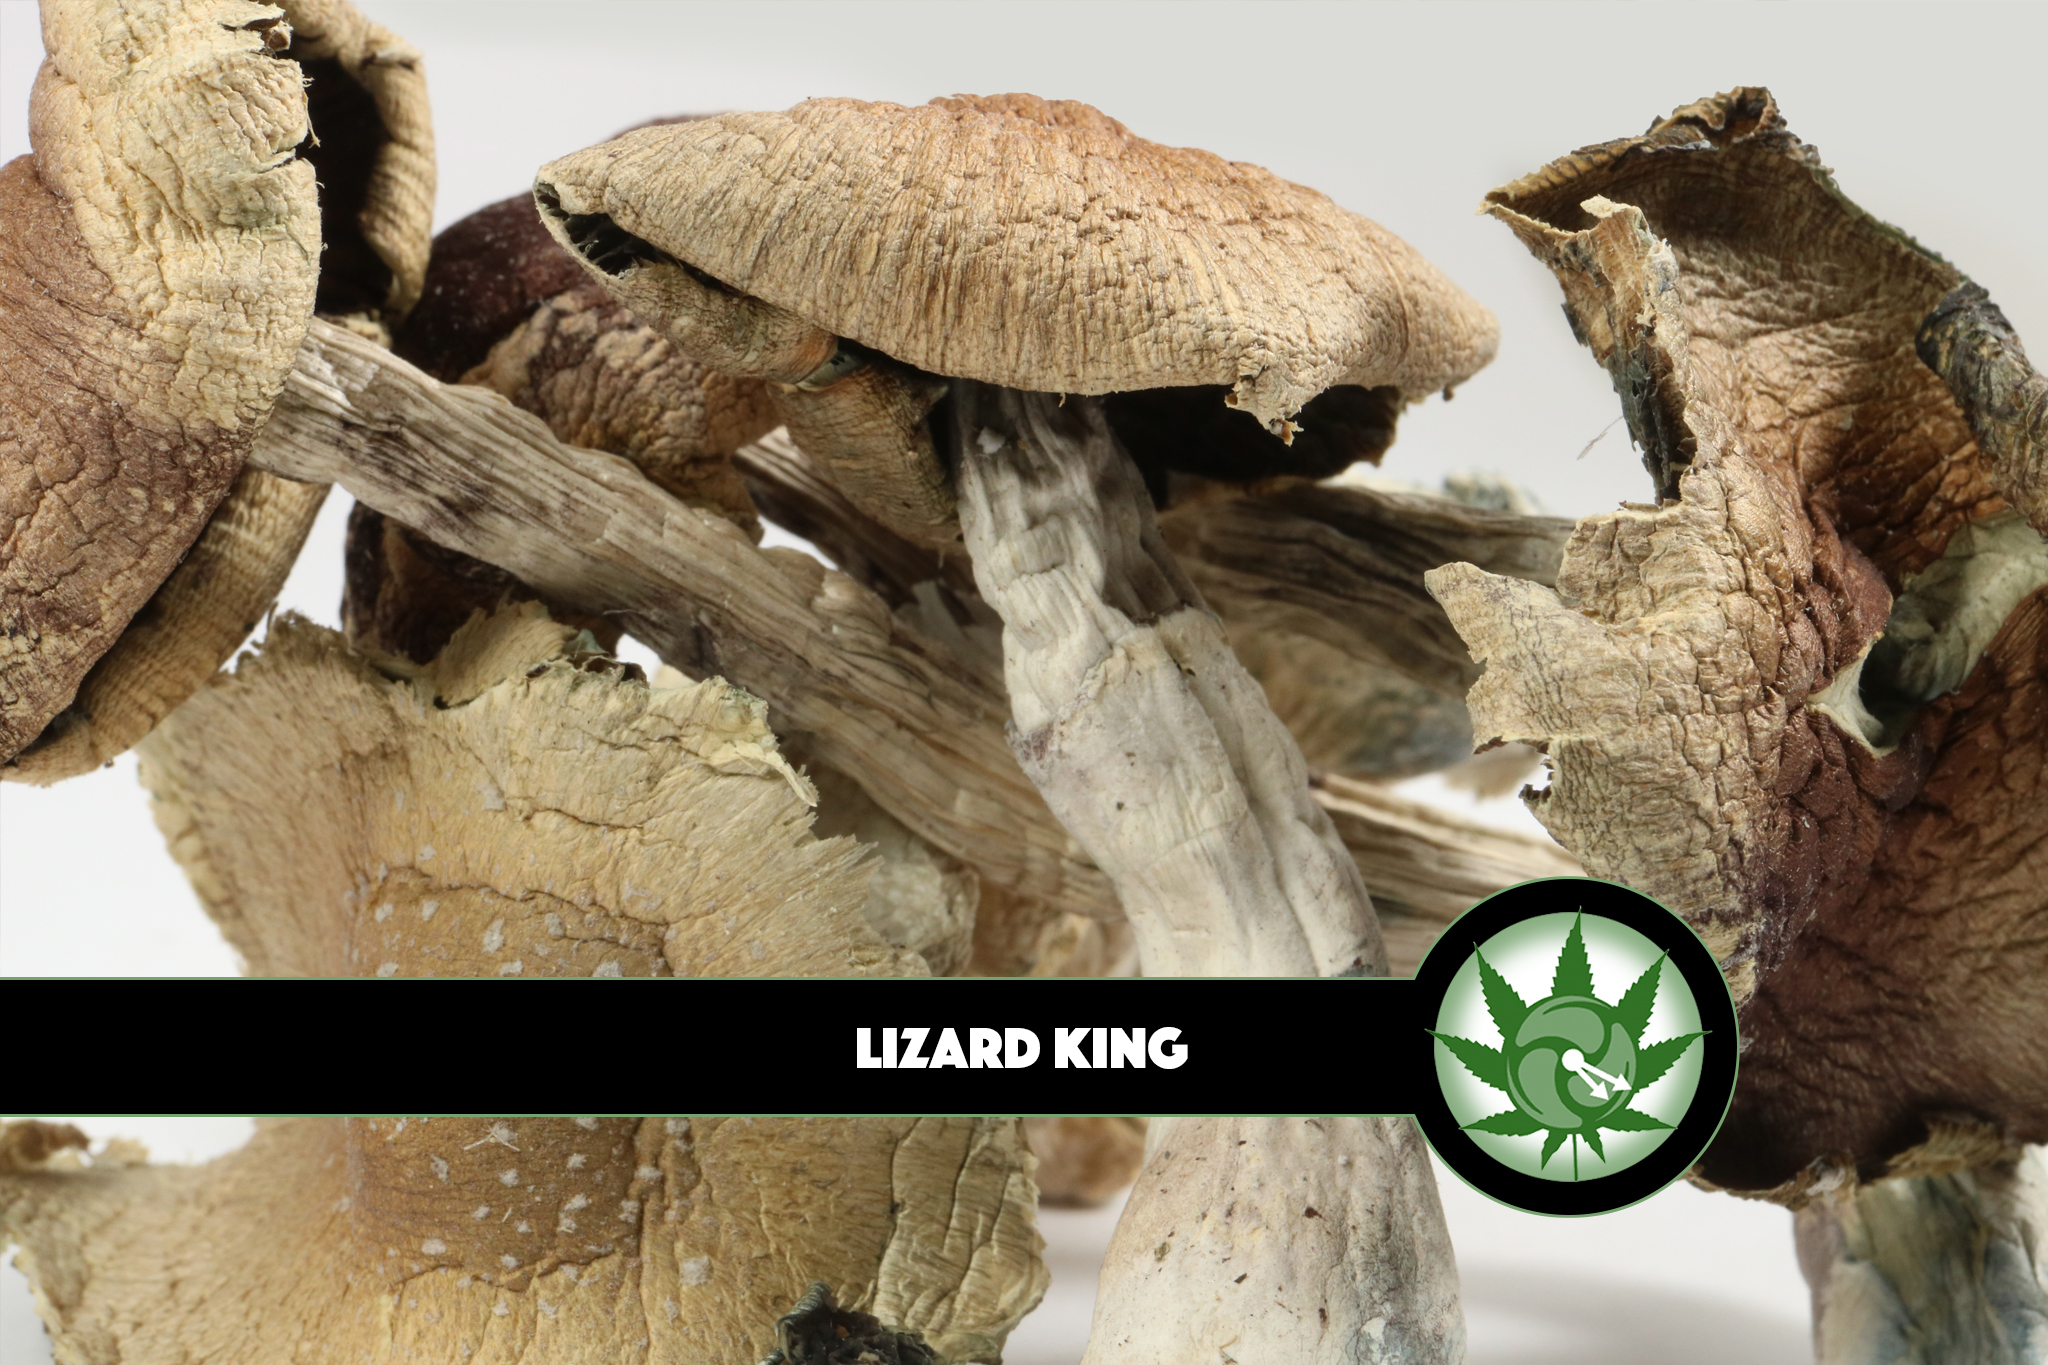 Click here to unlock the guide to understanding lizard king mushroom!